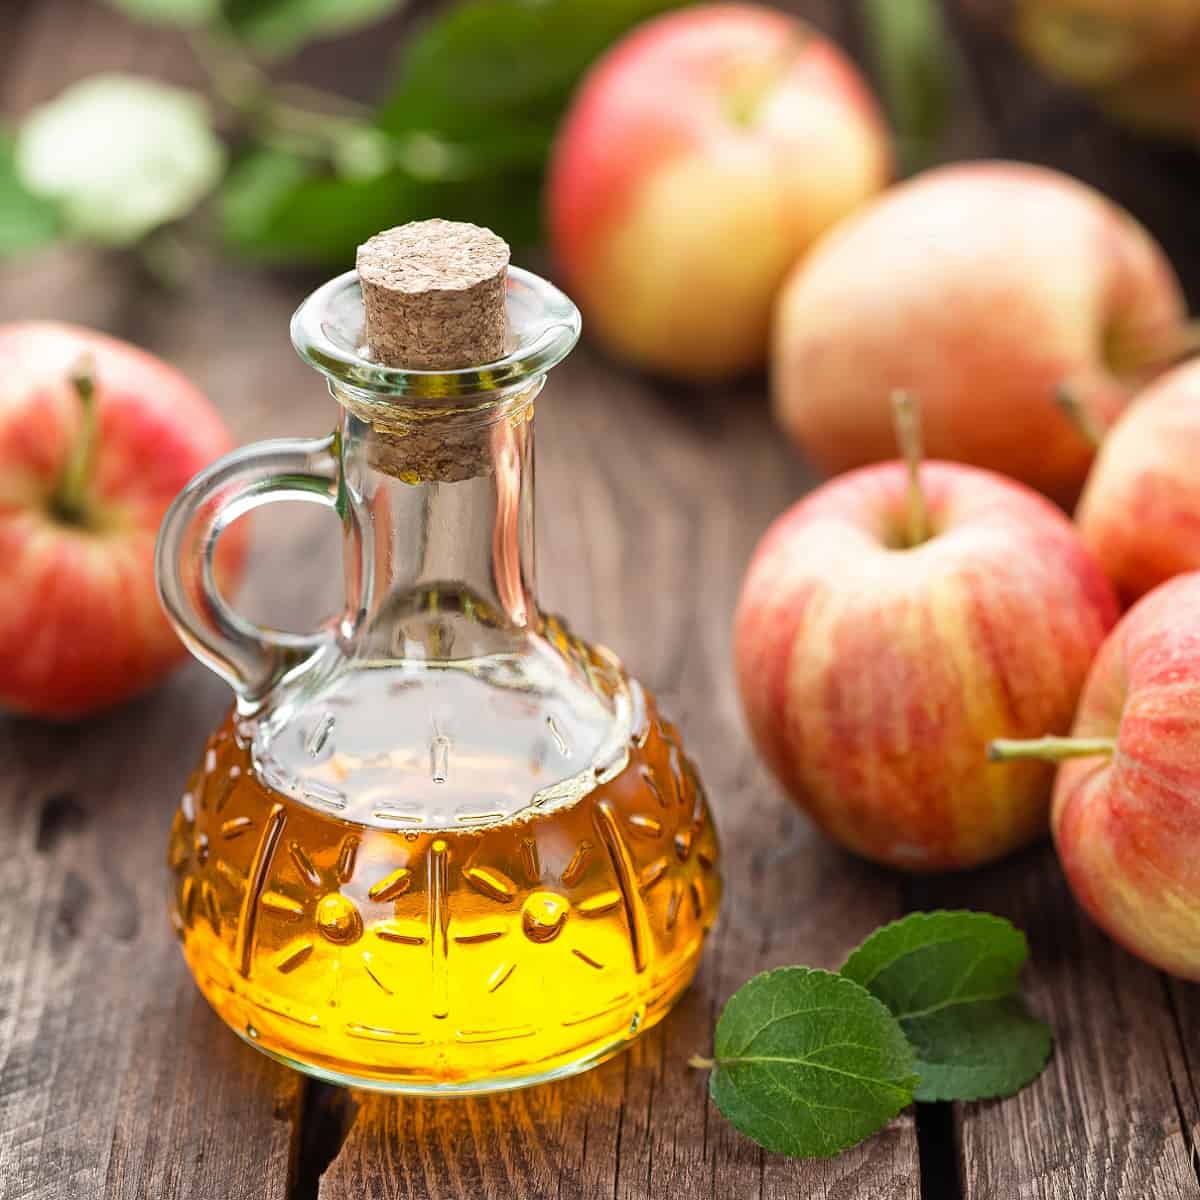 The Best Apple Cider Vinegar Substitutes for Baking